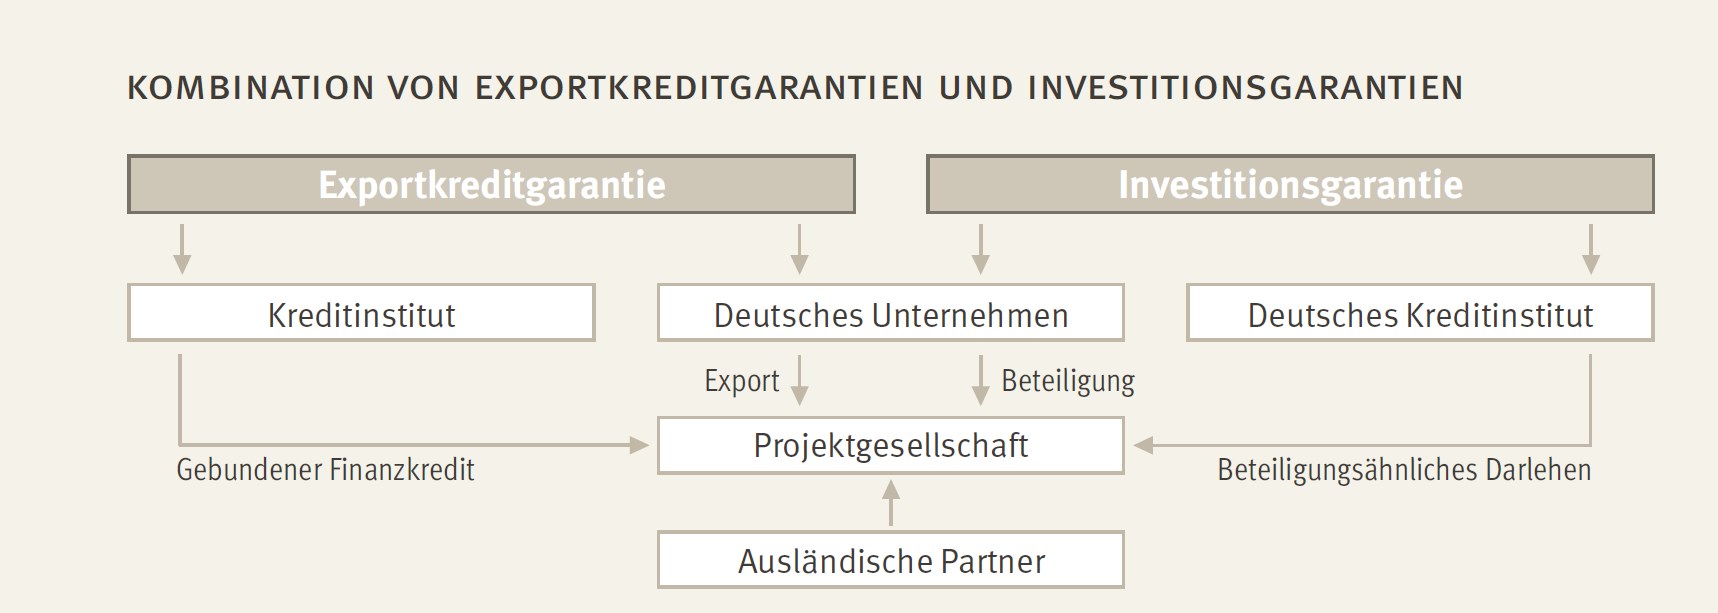 Grafik Kombination Exportkredit und Investitionsgarantien